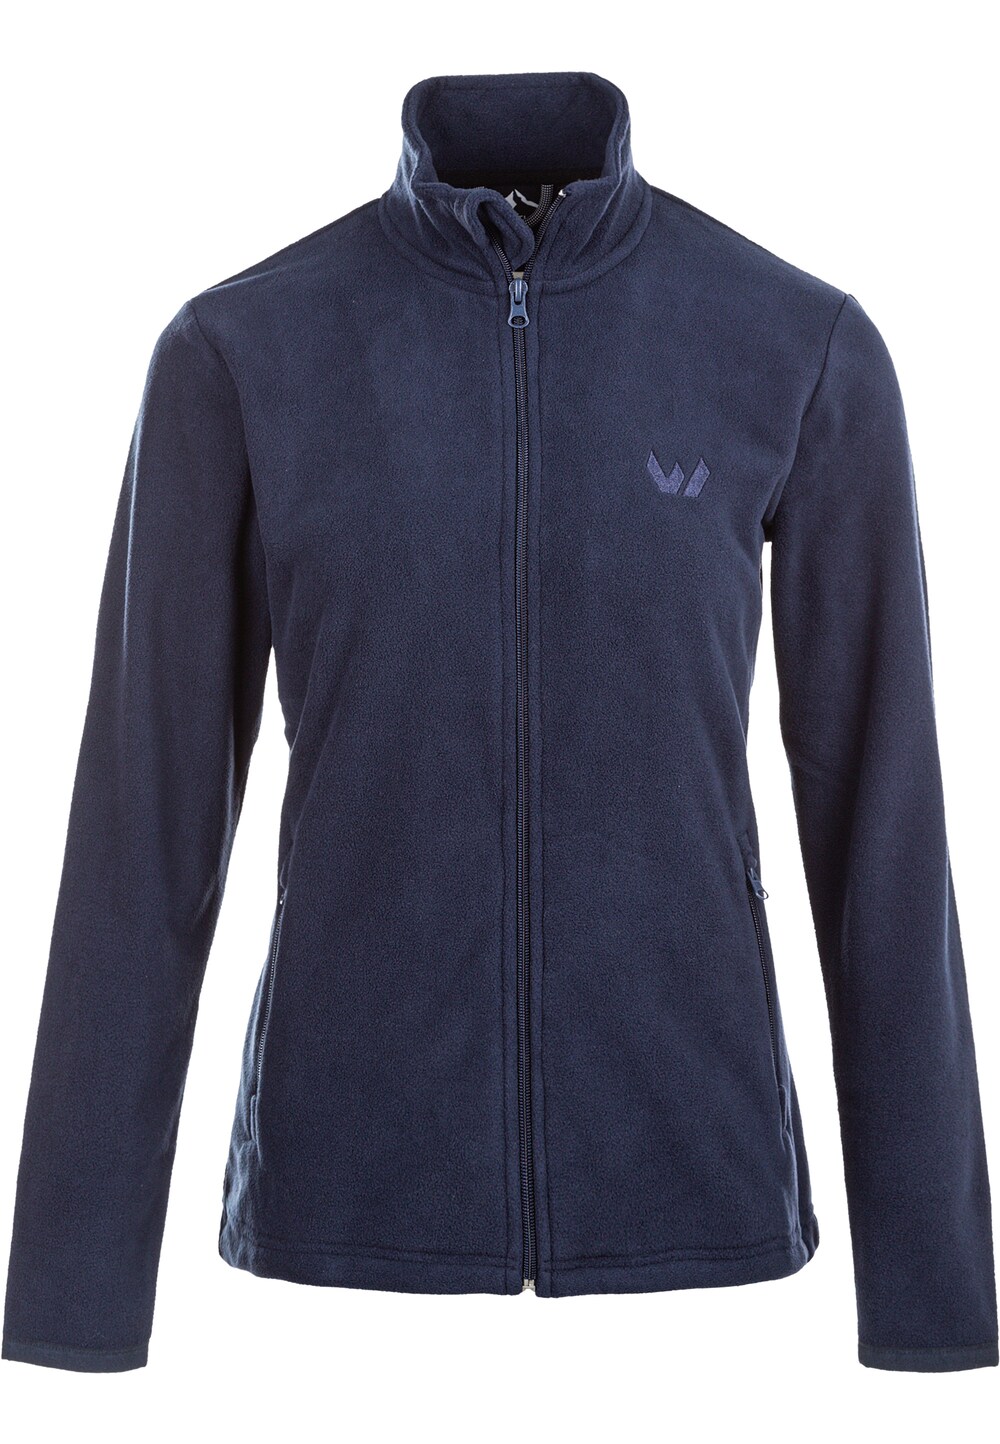 Спортивная флисовая куртка Whistler Cocoon, темно-синий цена и фото